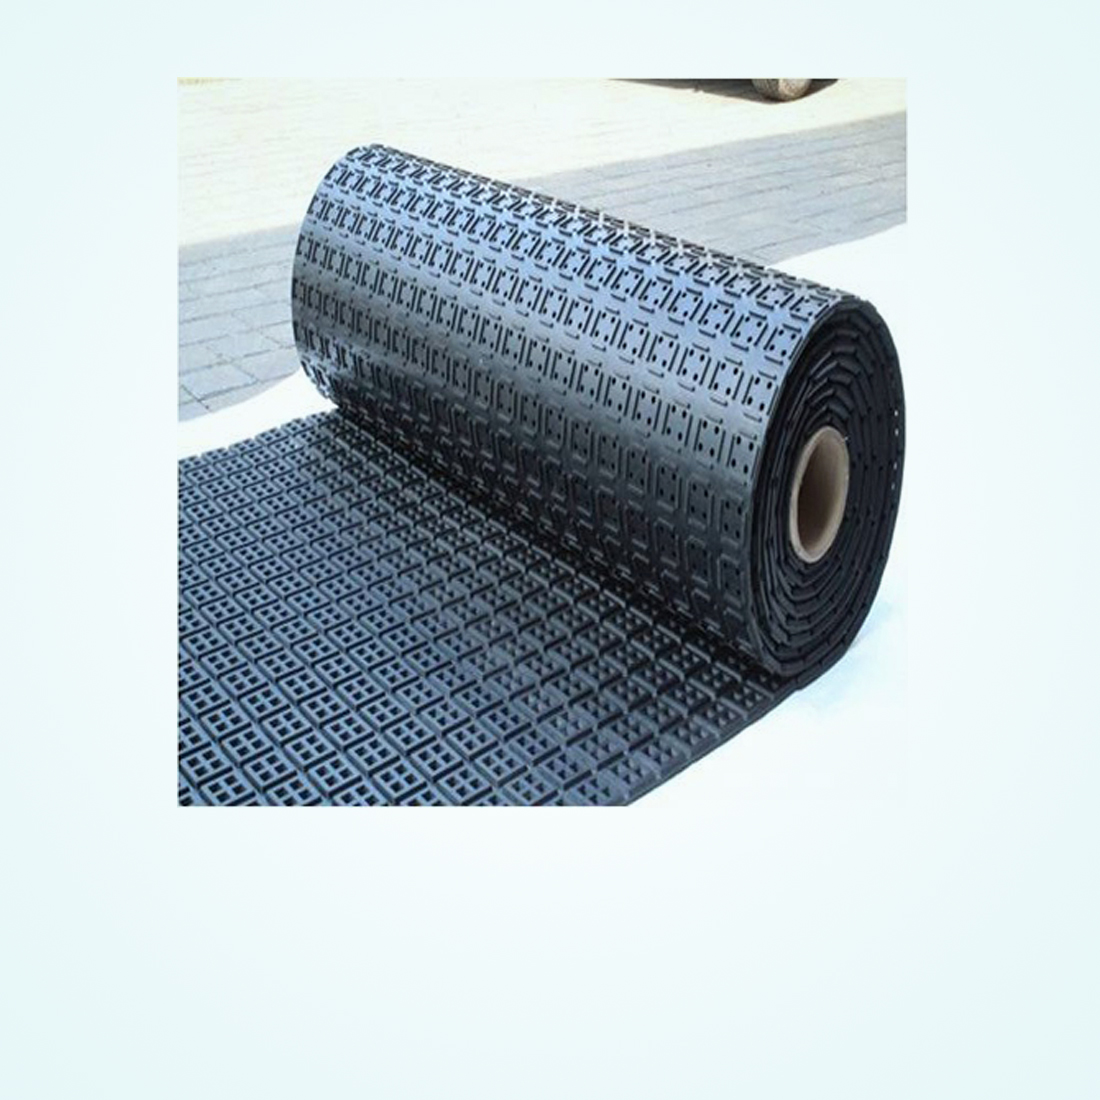 anti-fatigue squarow roll mats